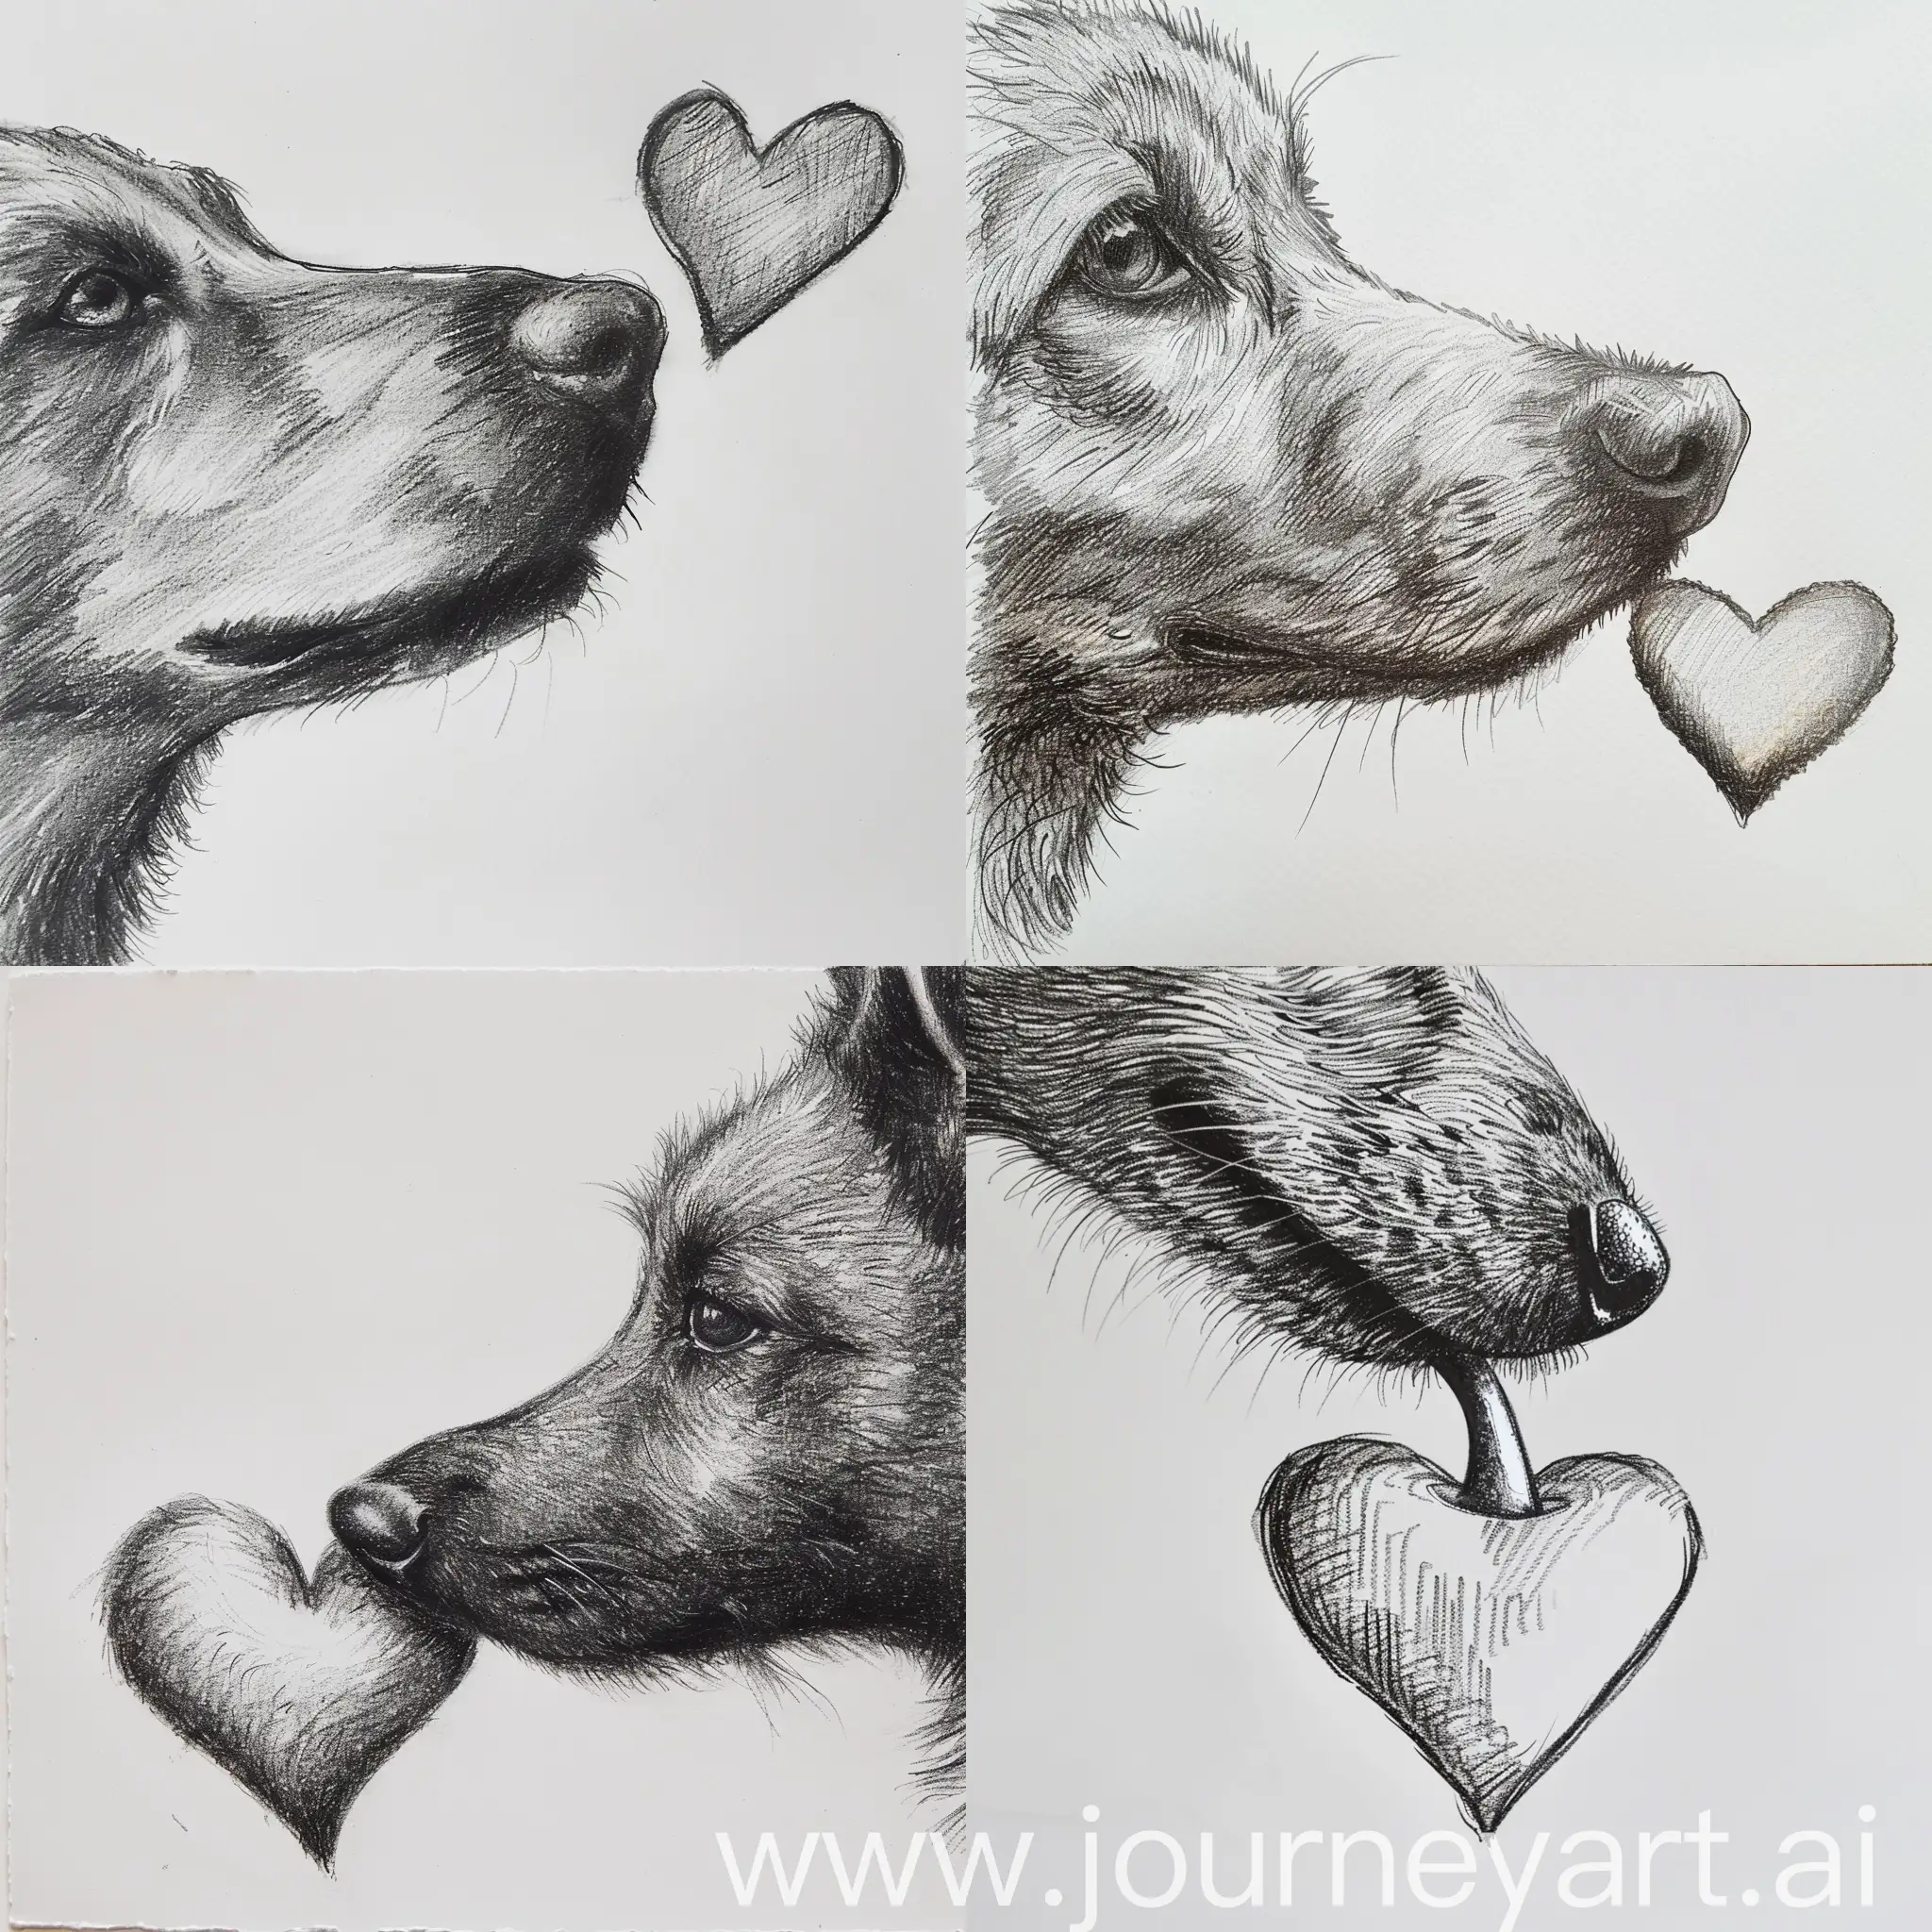 Heartwarming-Dog-Nose-Touching-Heart-Illustration